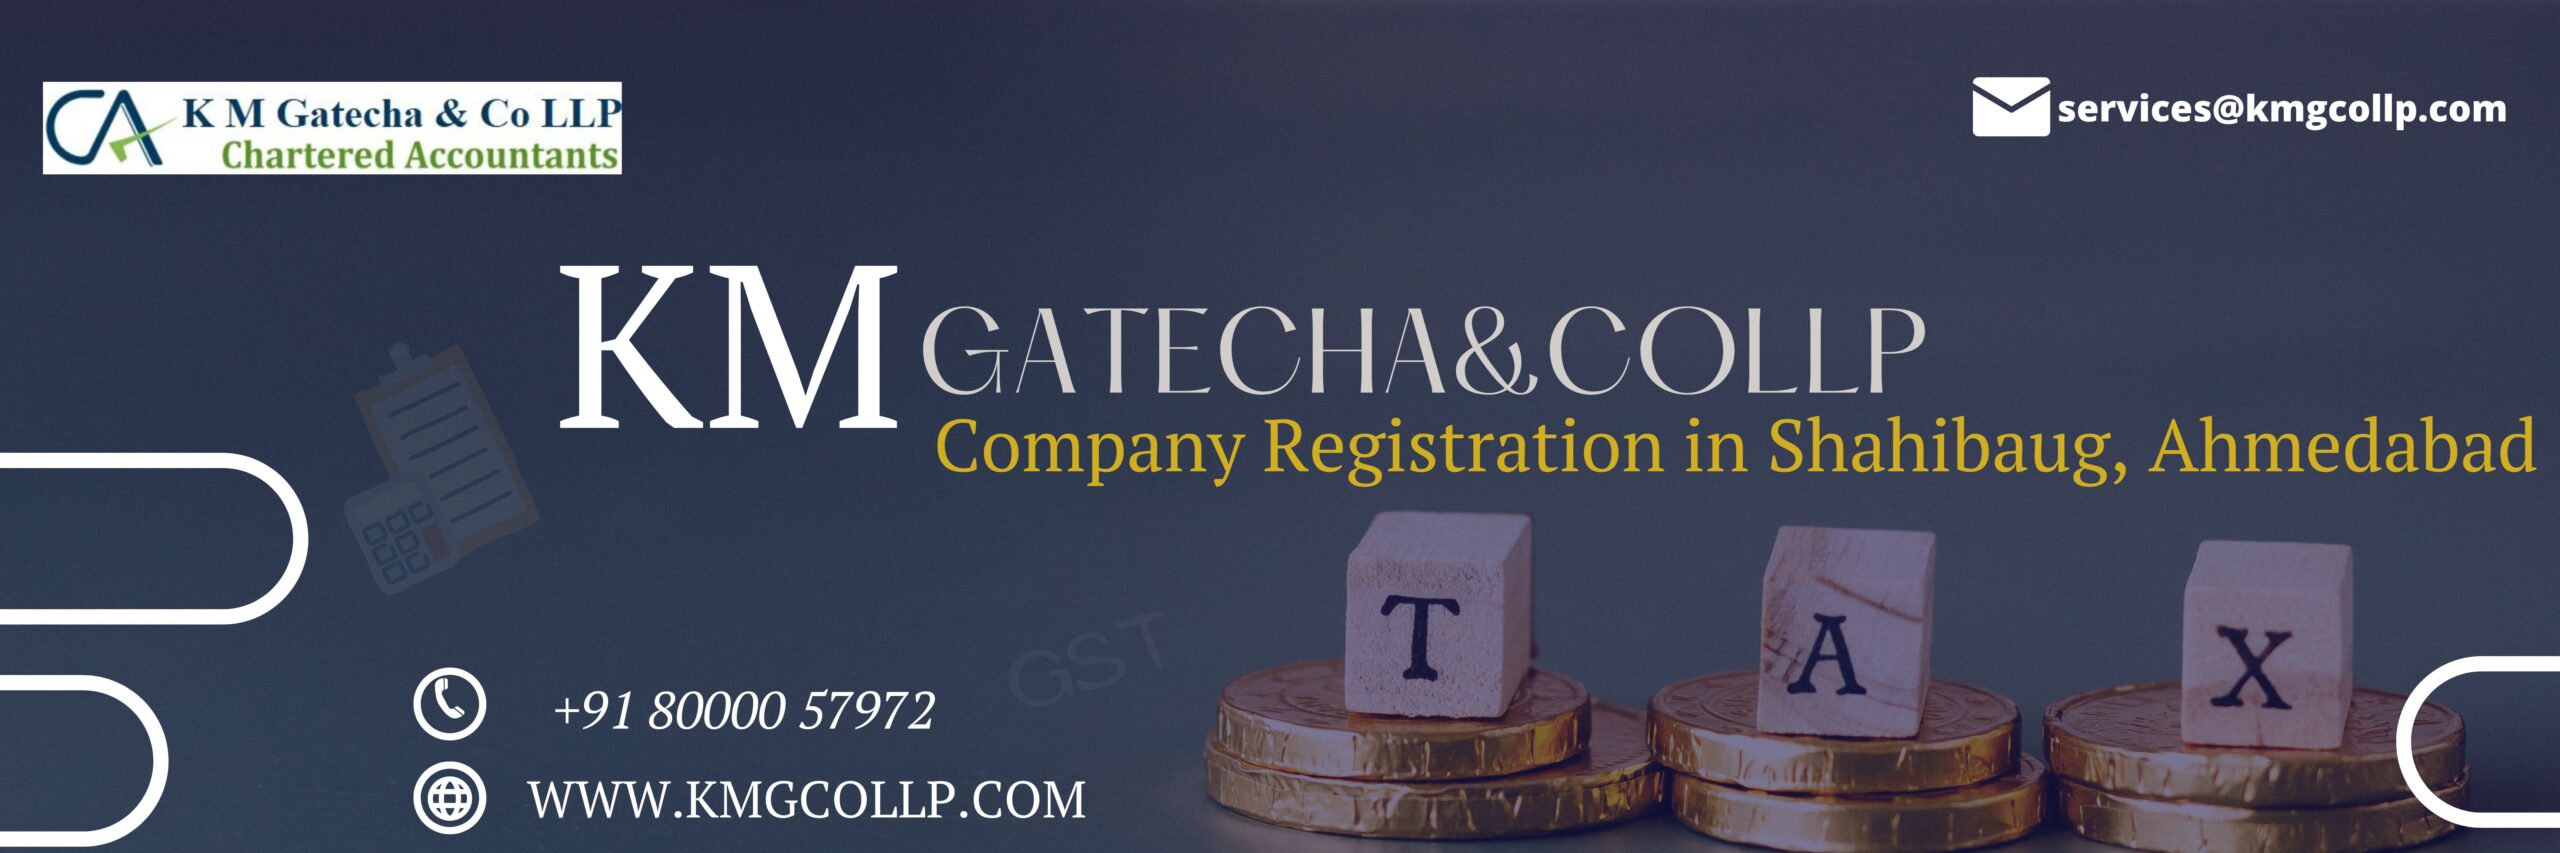 Company Registration in Shahibaug, Ahmedabad